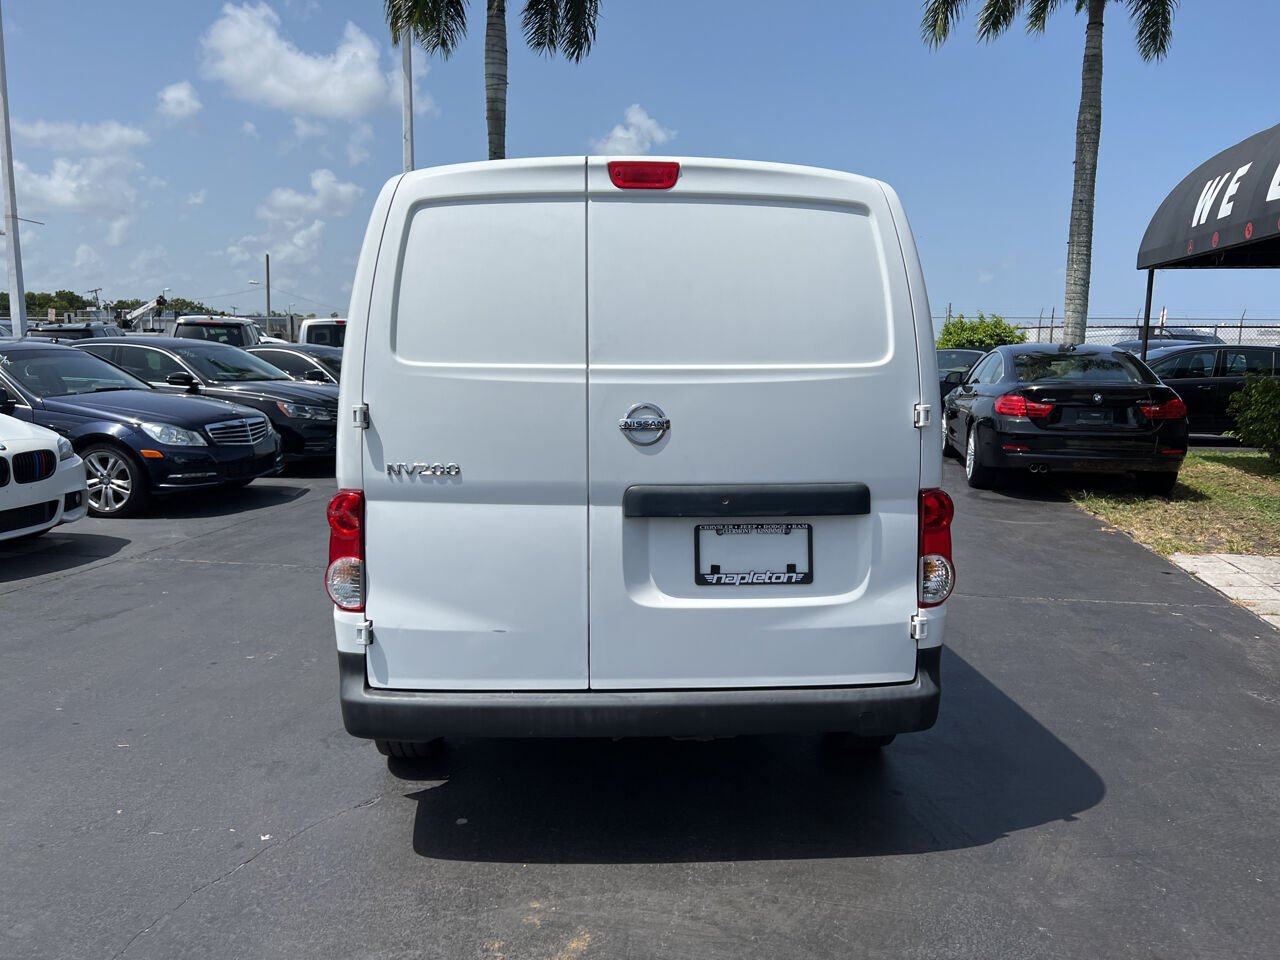 2015 NISSAN NV200 Van - $15,900